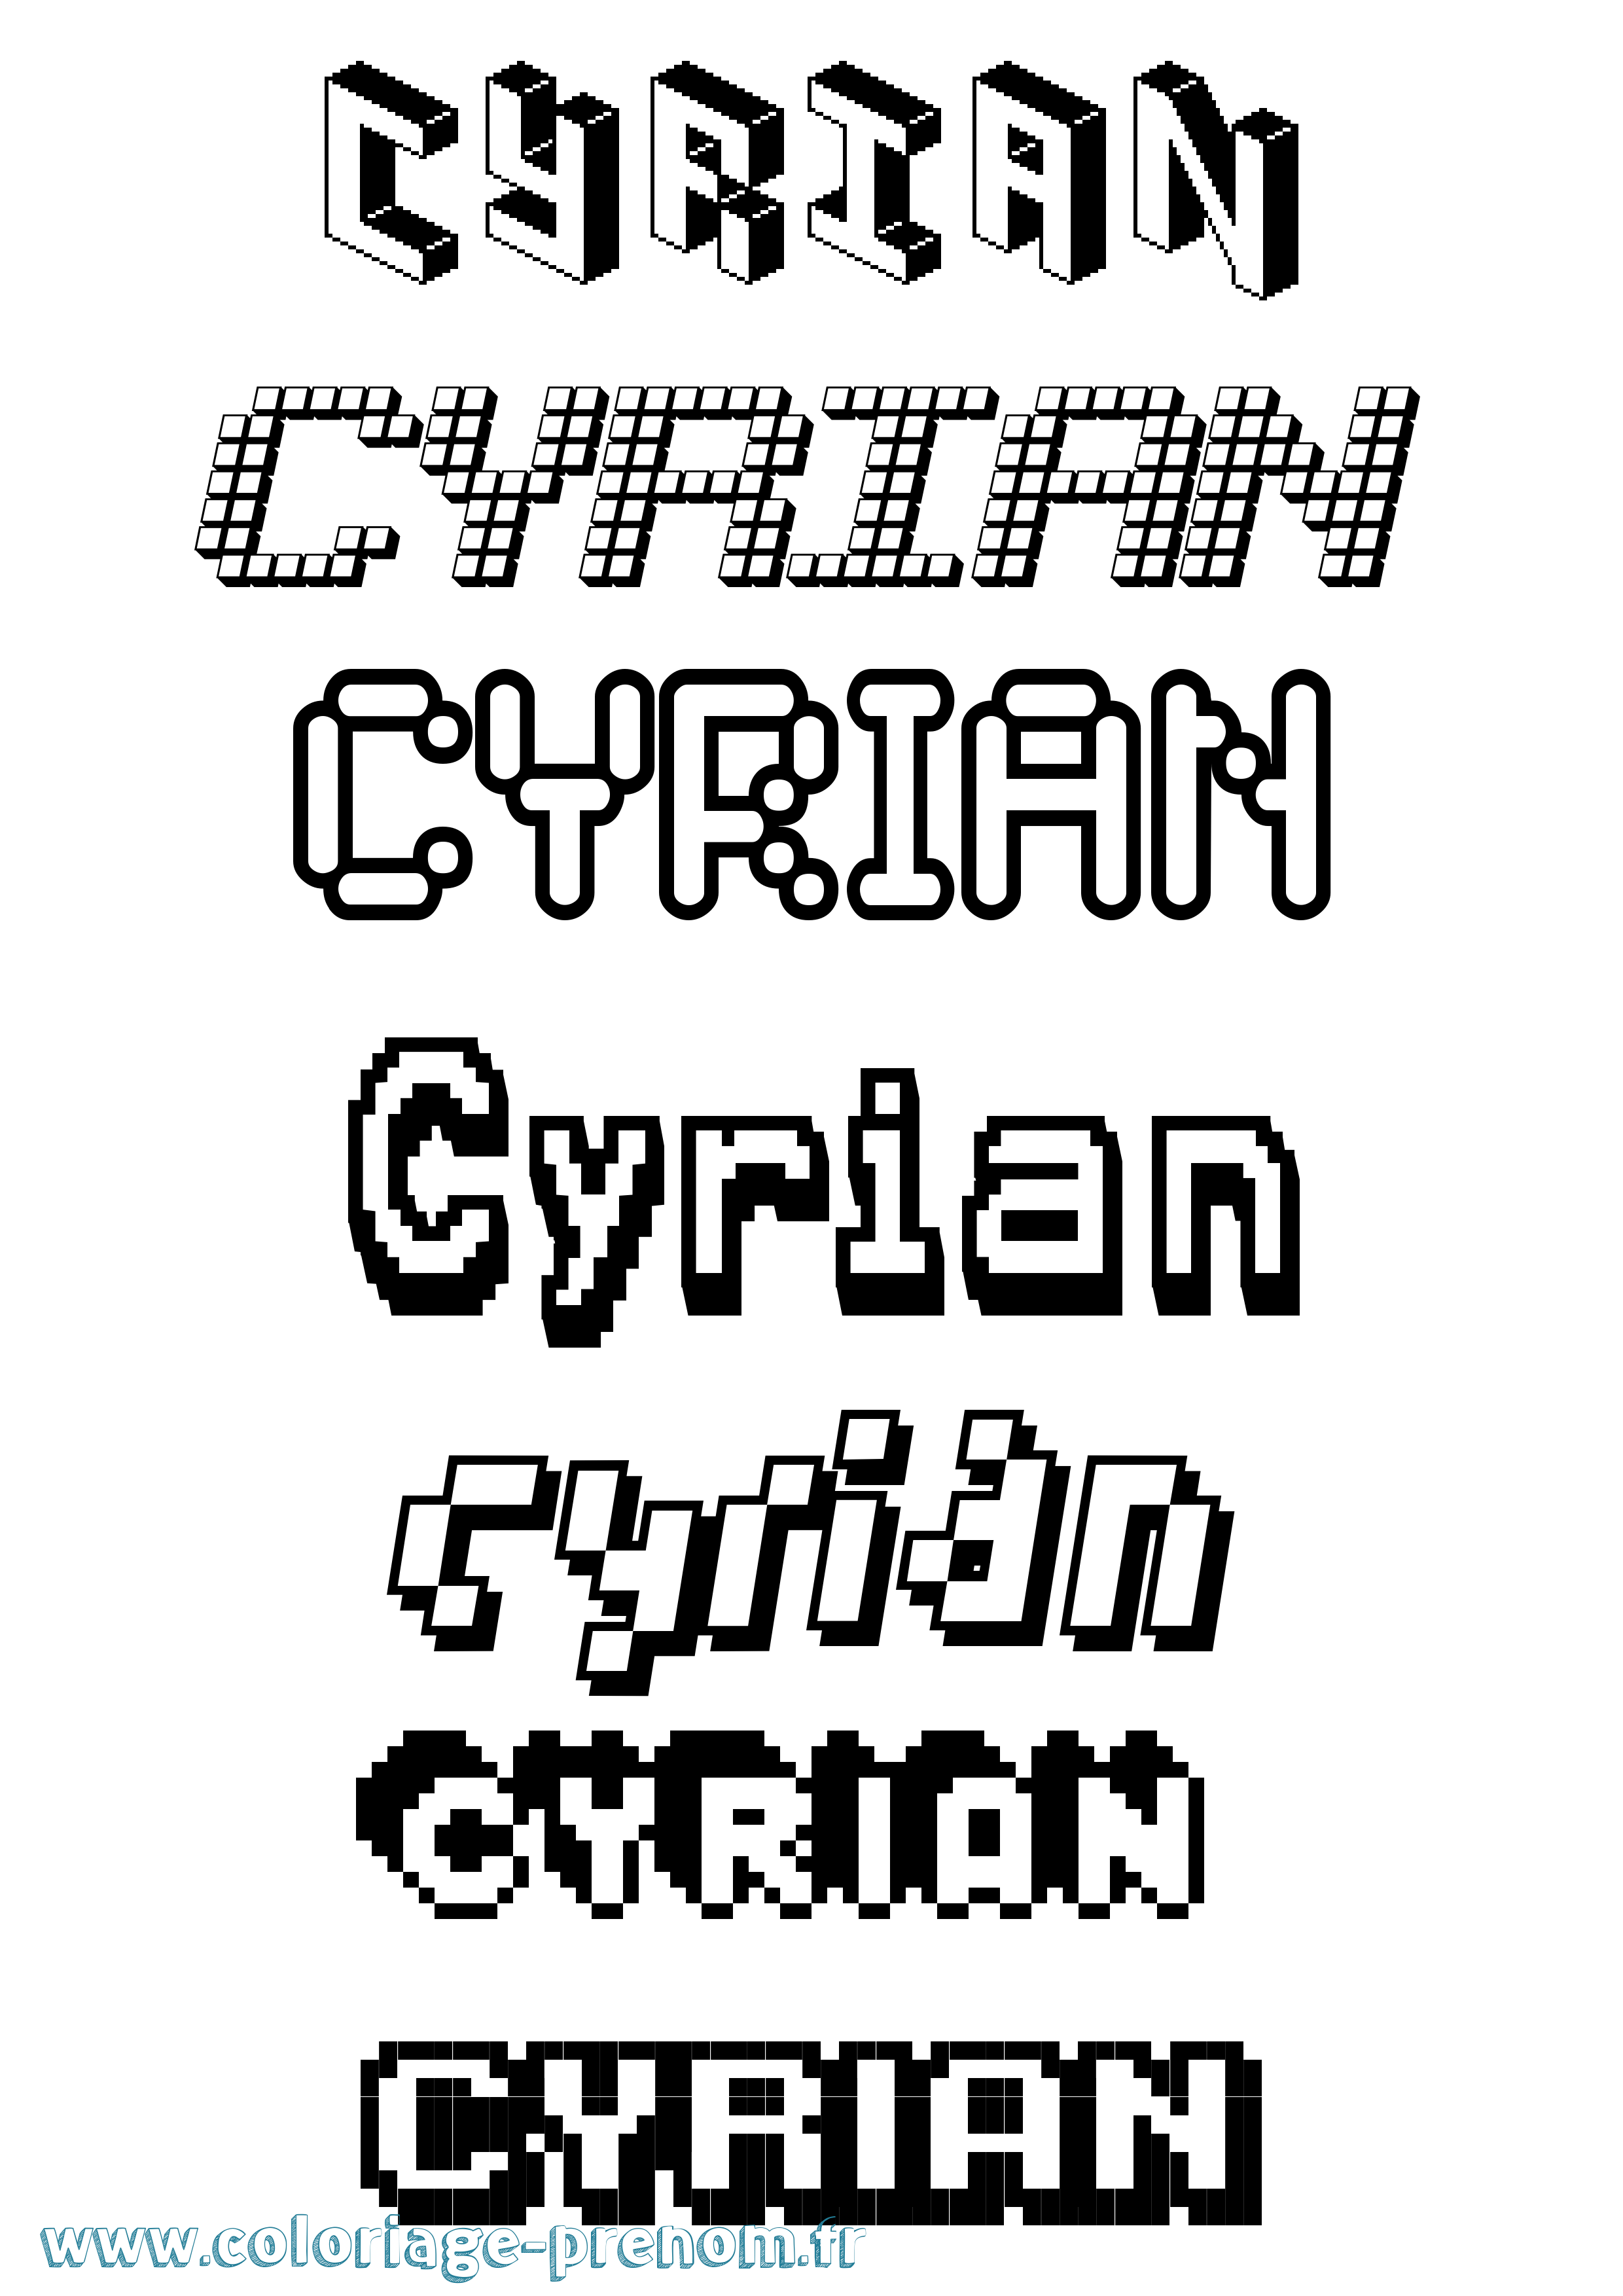 Coloriage prénom Cyrian